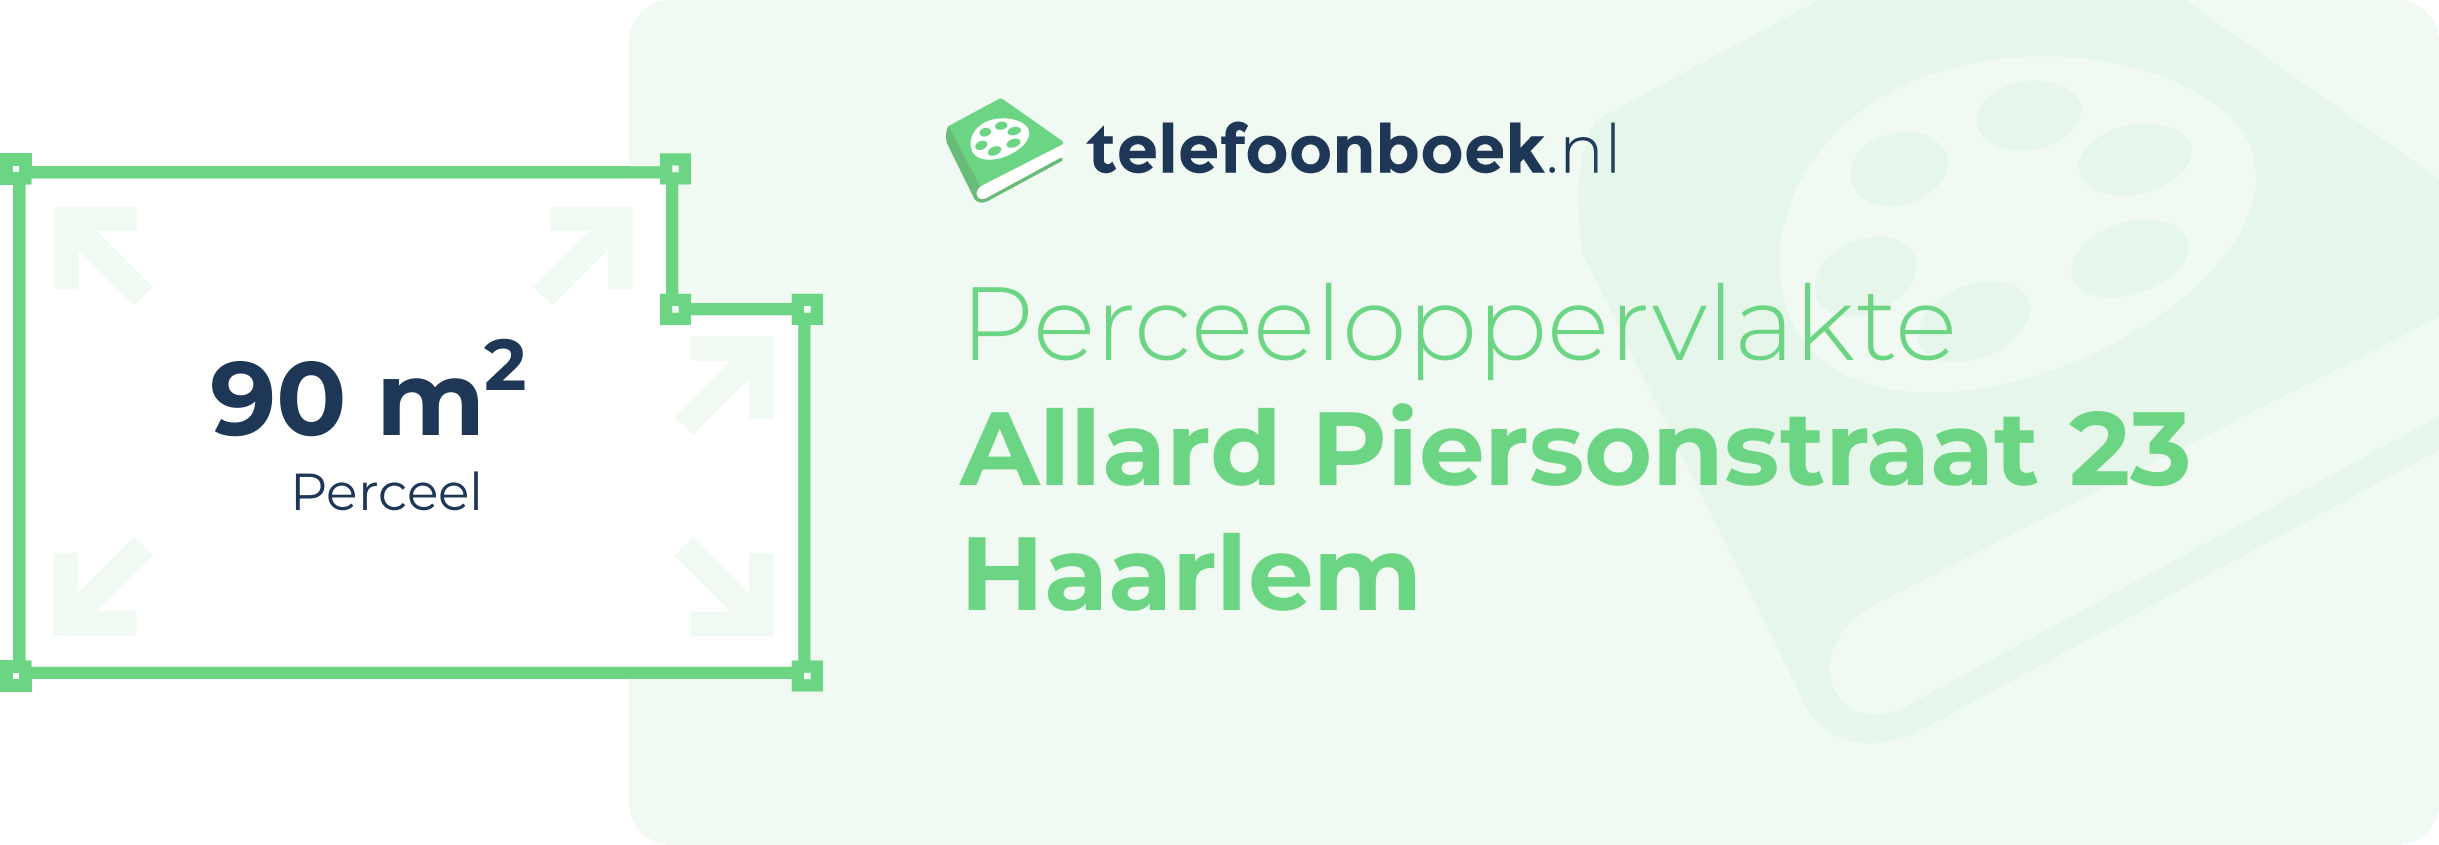 Perceeloppervlakte Allard Piersonstraat 23 Haarlem